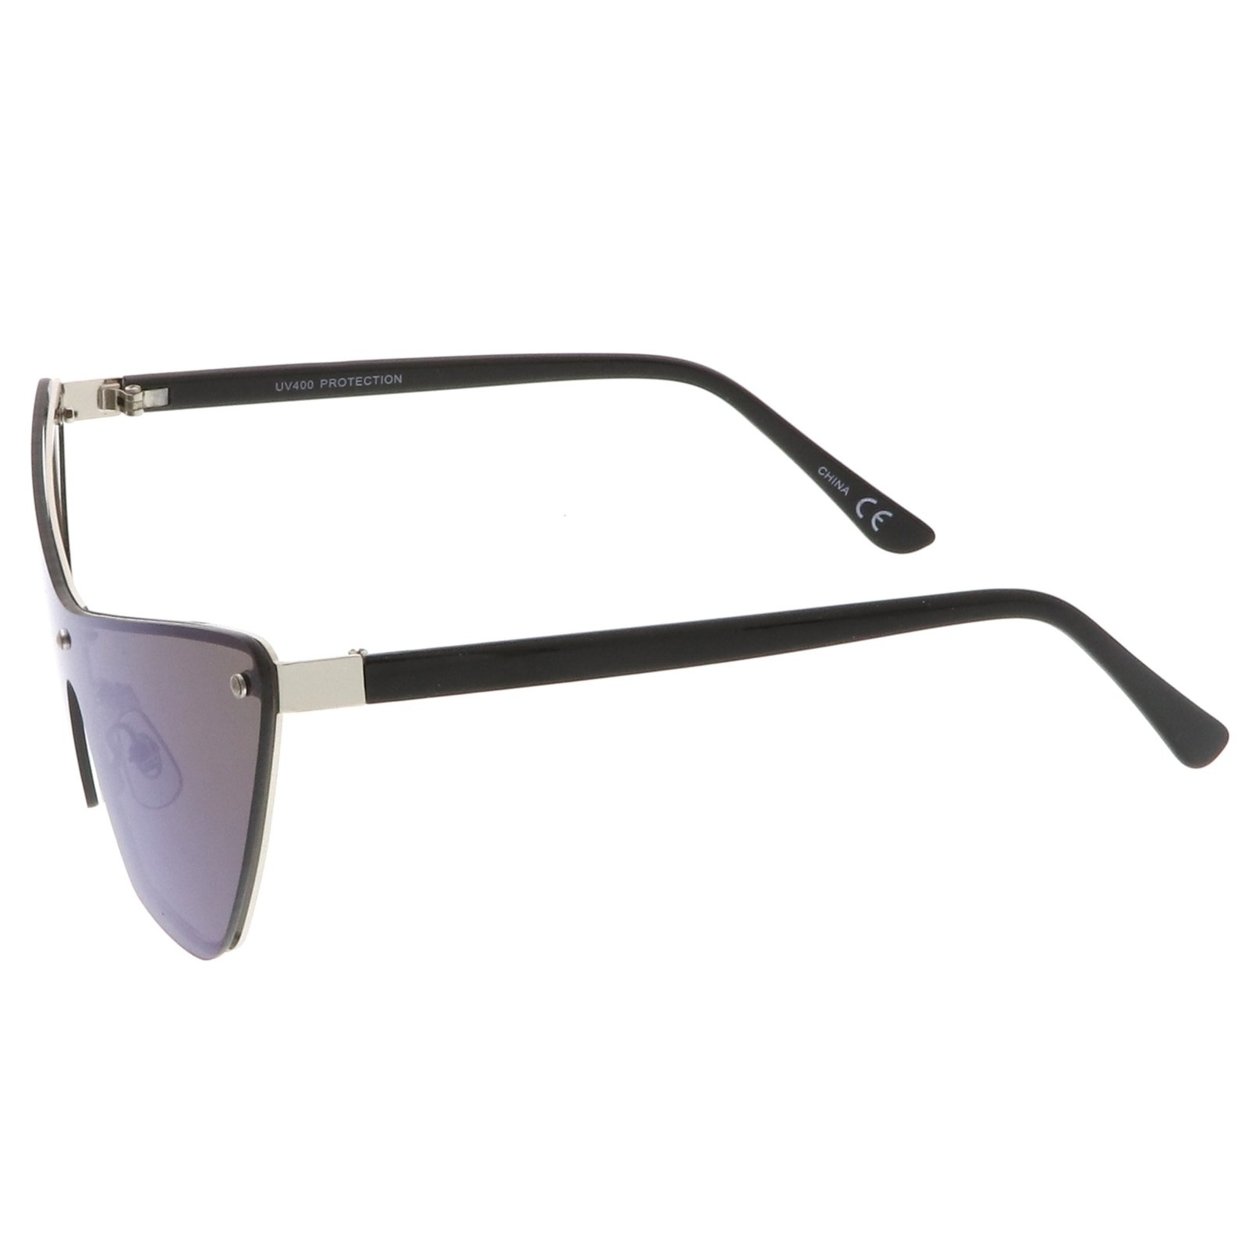 Oversize Rimless Colored Mirror Mono Lens Shield Cat Eye Sunglasses 68mm - Black Black / Silver Mirror